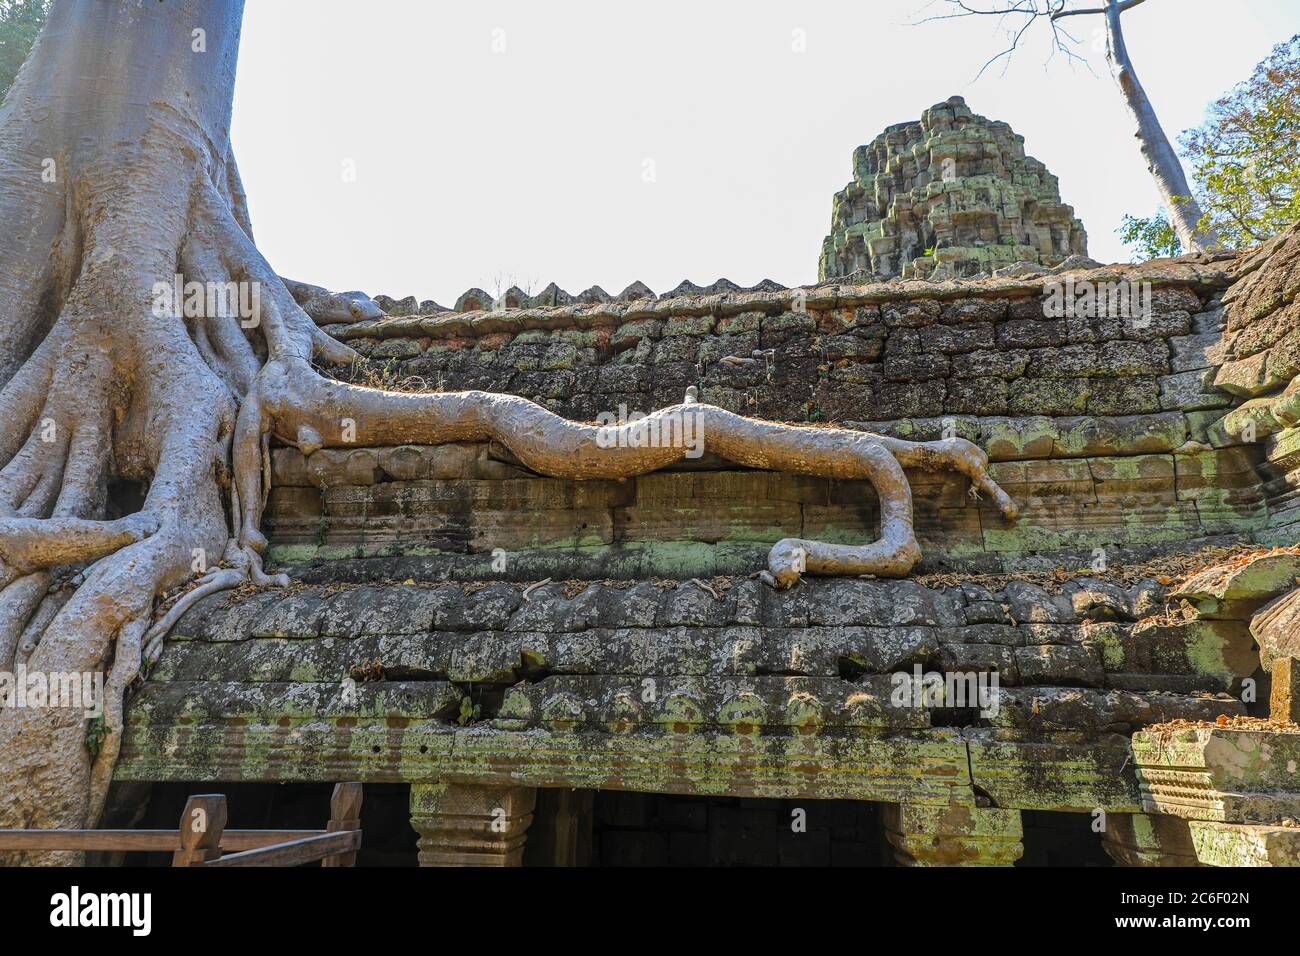 Seidenbaumbaumwolle (Ceiba pentandra) Wurzeln wachsen unter dem Mauerwerk im Ta Prohm Tempelkomplex, Siem Reap, Kambodscha, Asien Stockfoto